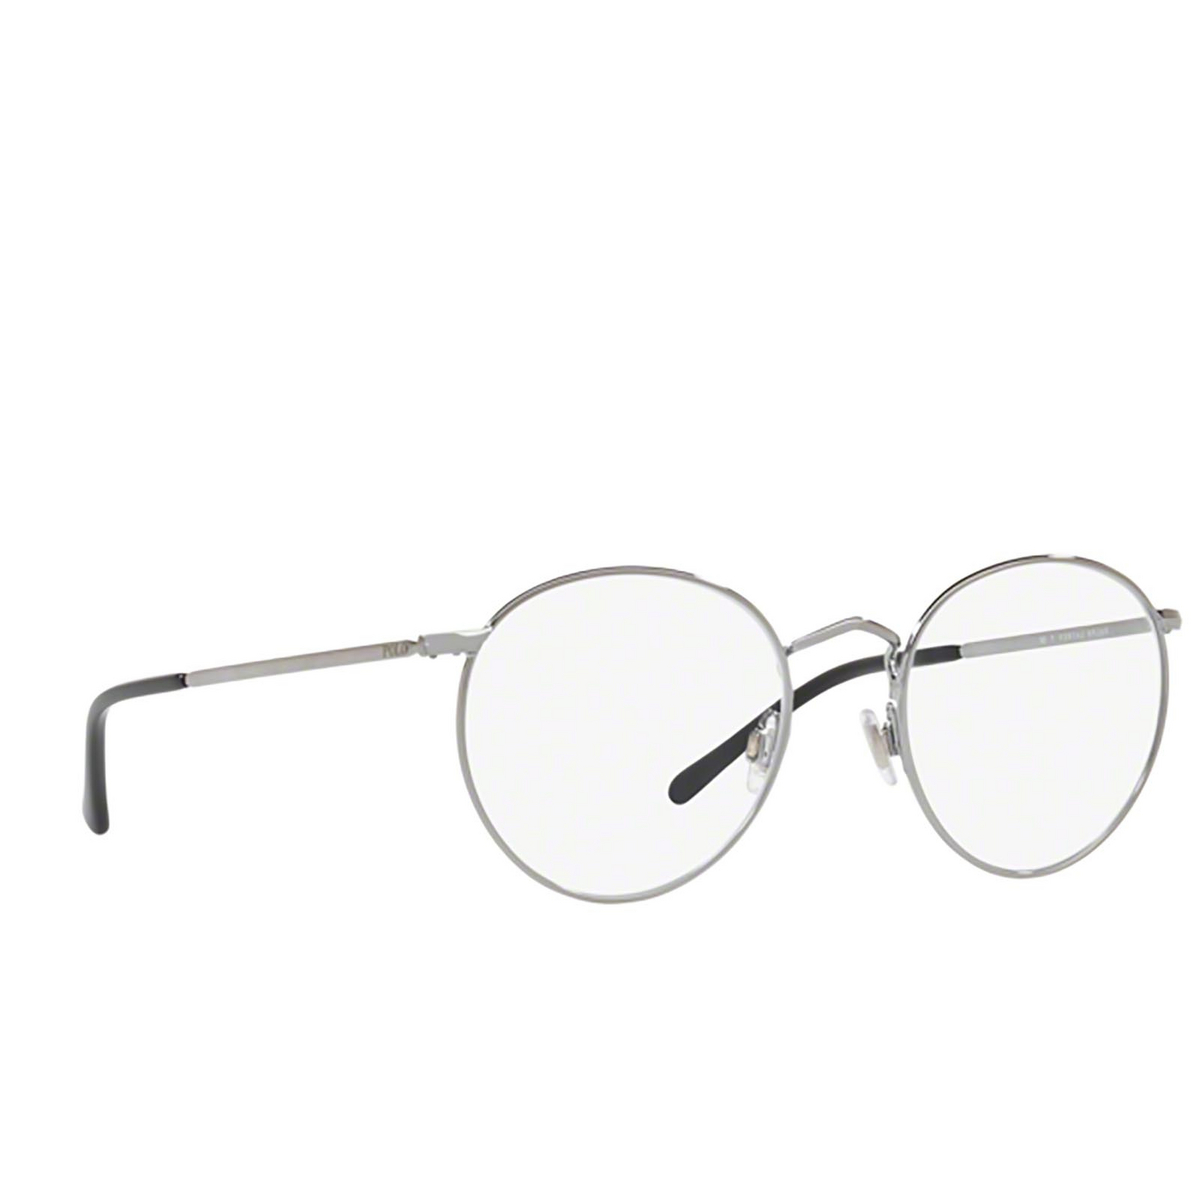 Polo Ralph Lauren® Round Eyeglasses: PH1179 color Shiny Gunmetal 9002 - three-quarters view.